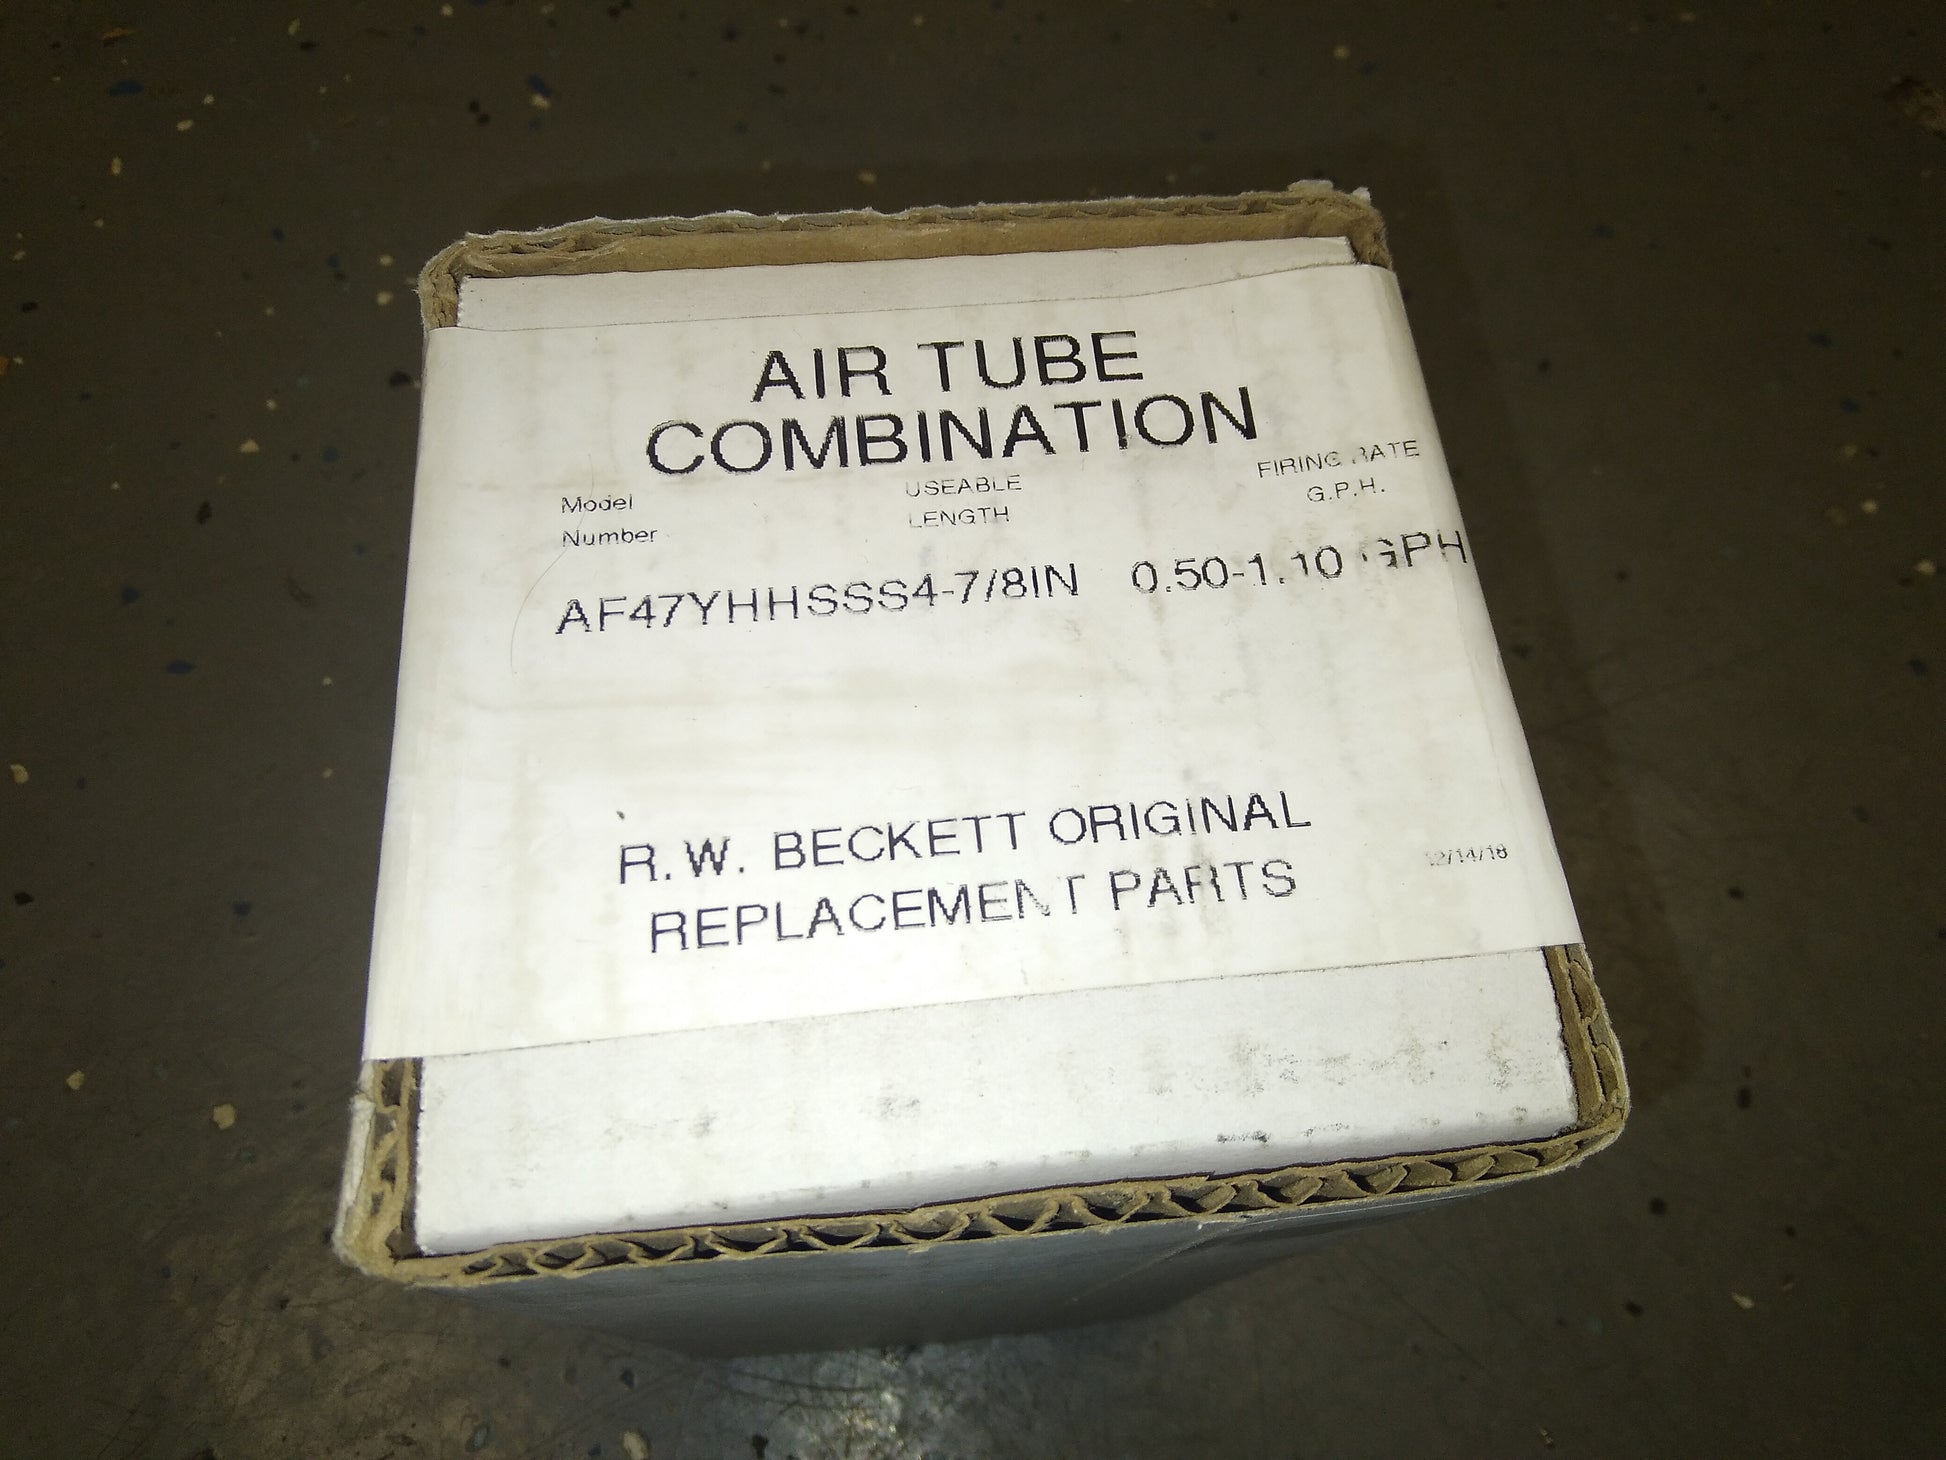 AIR TUBE COMBINATION